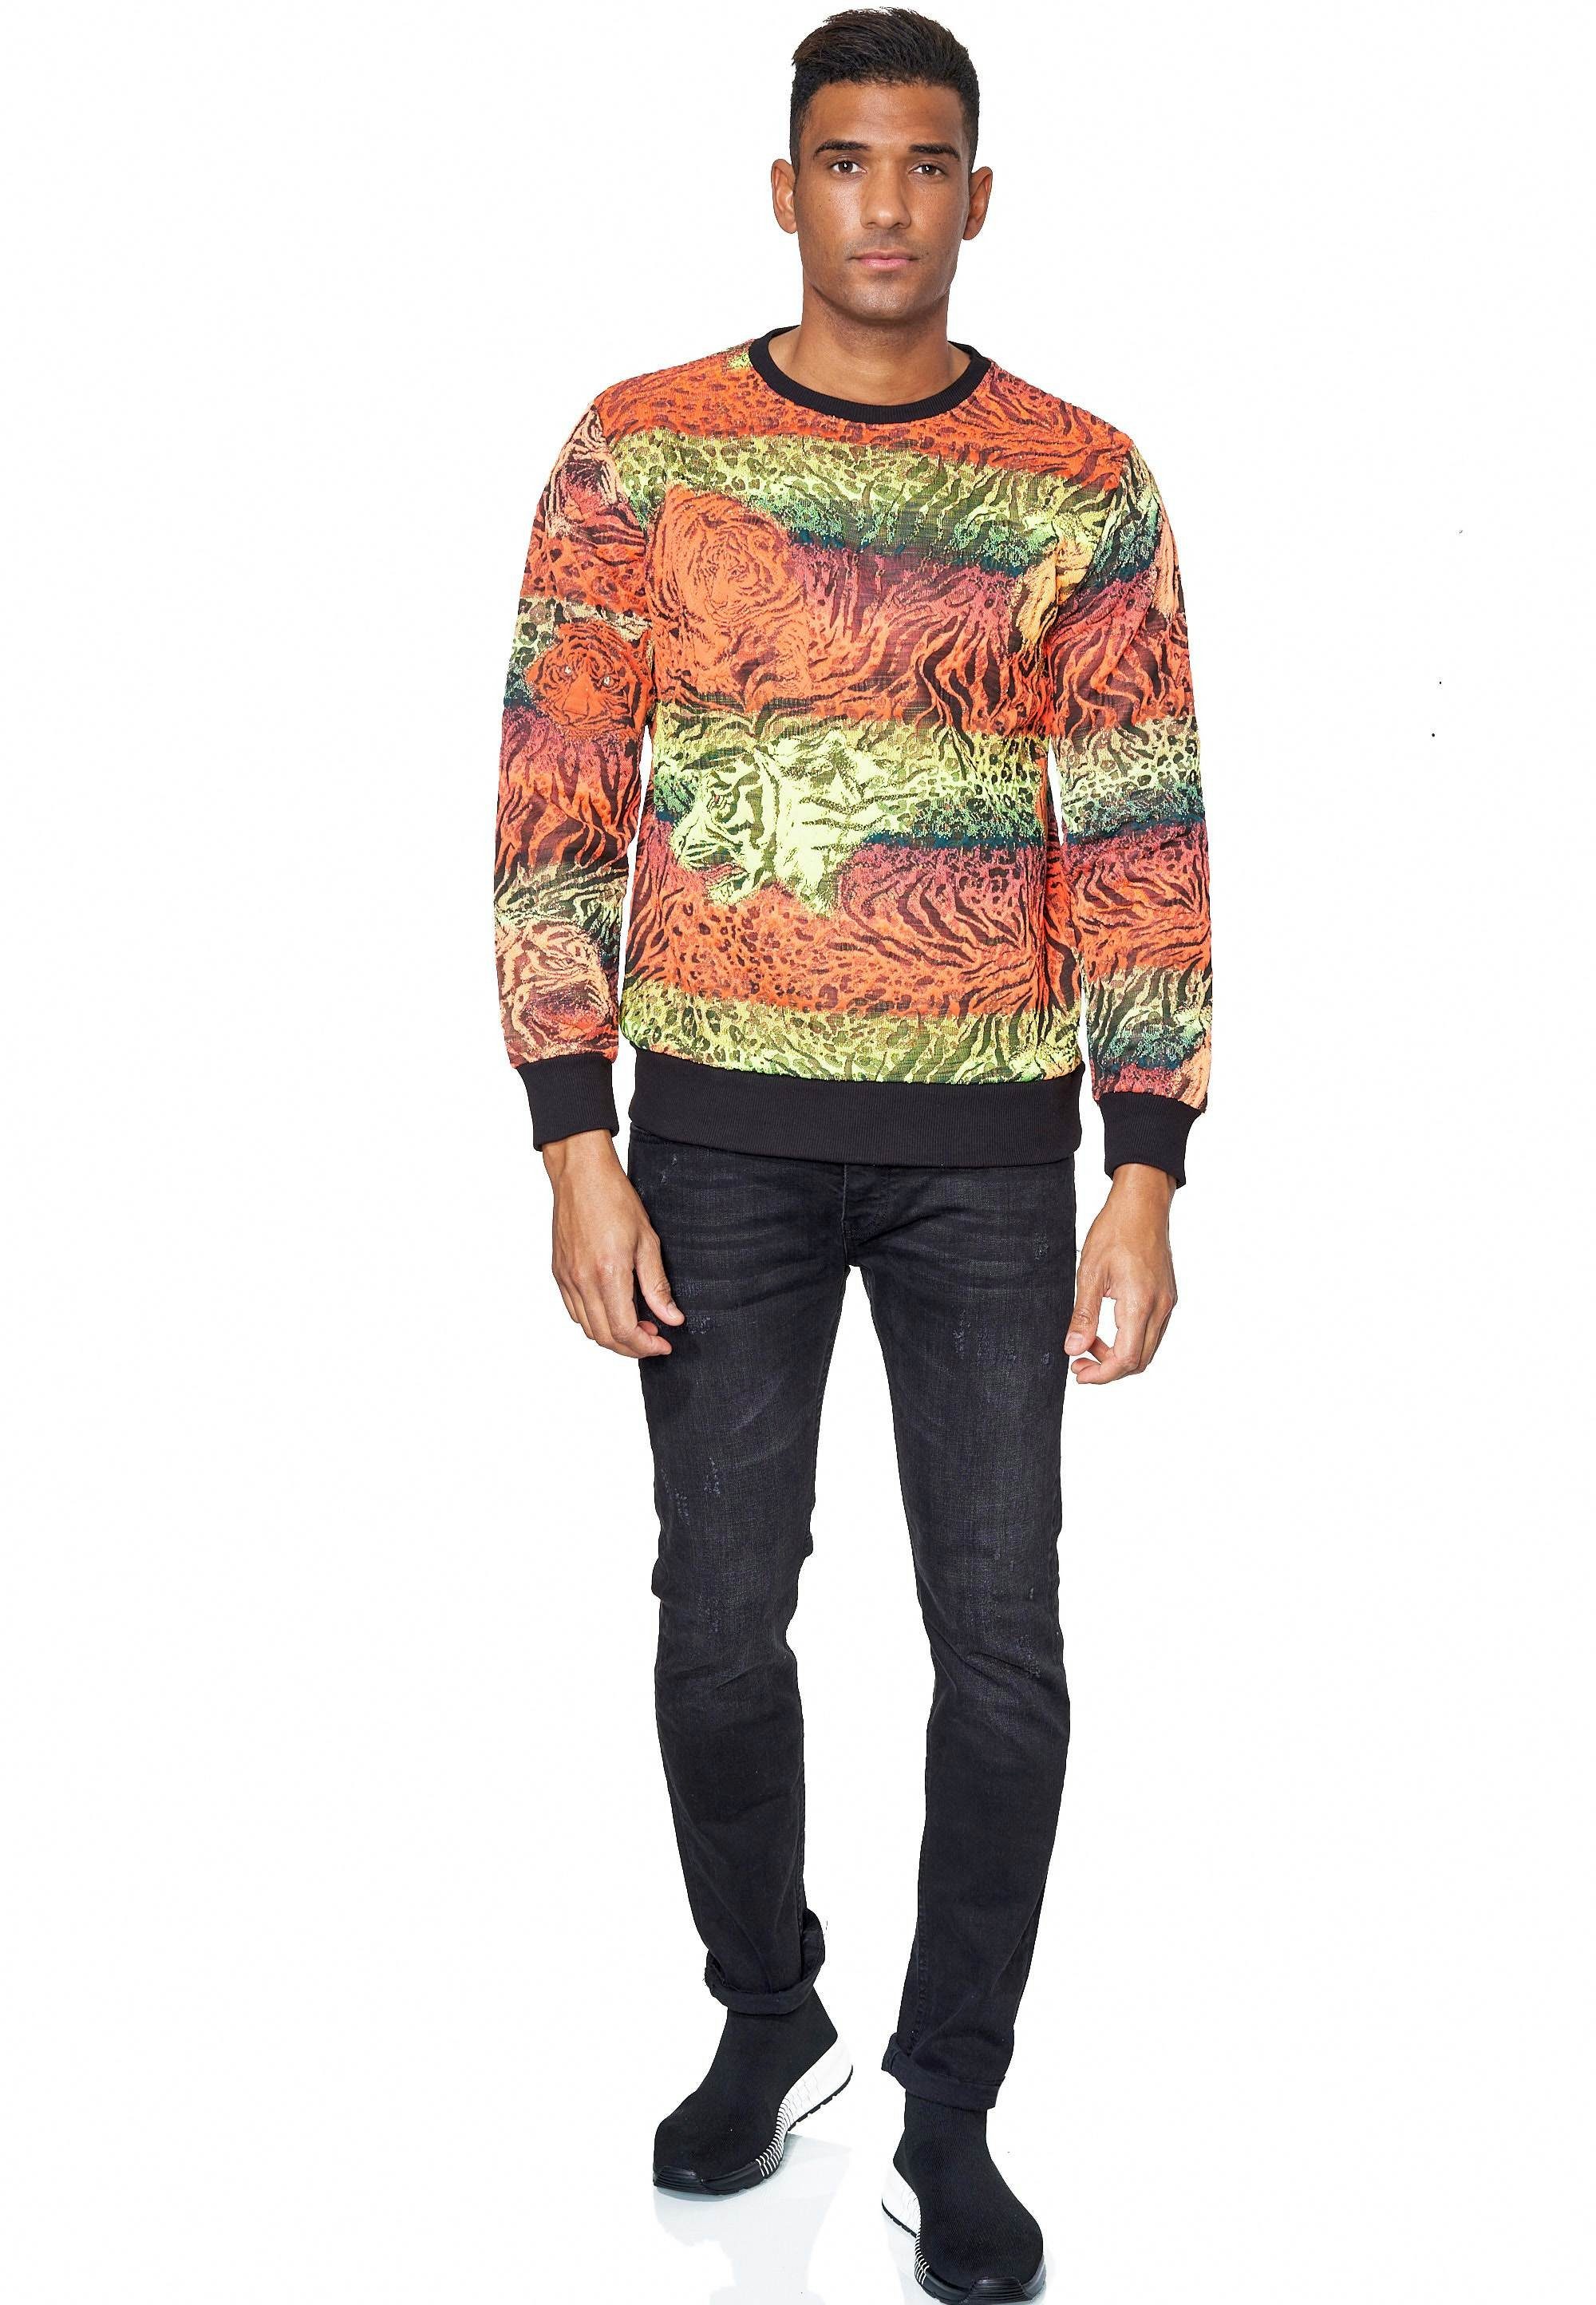 Sweatshirt Tiger-Design trendigen Sweater Neal im Rusty Neal Rusty